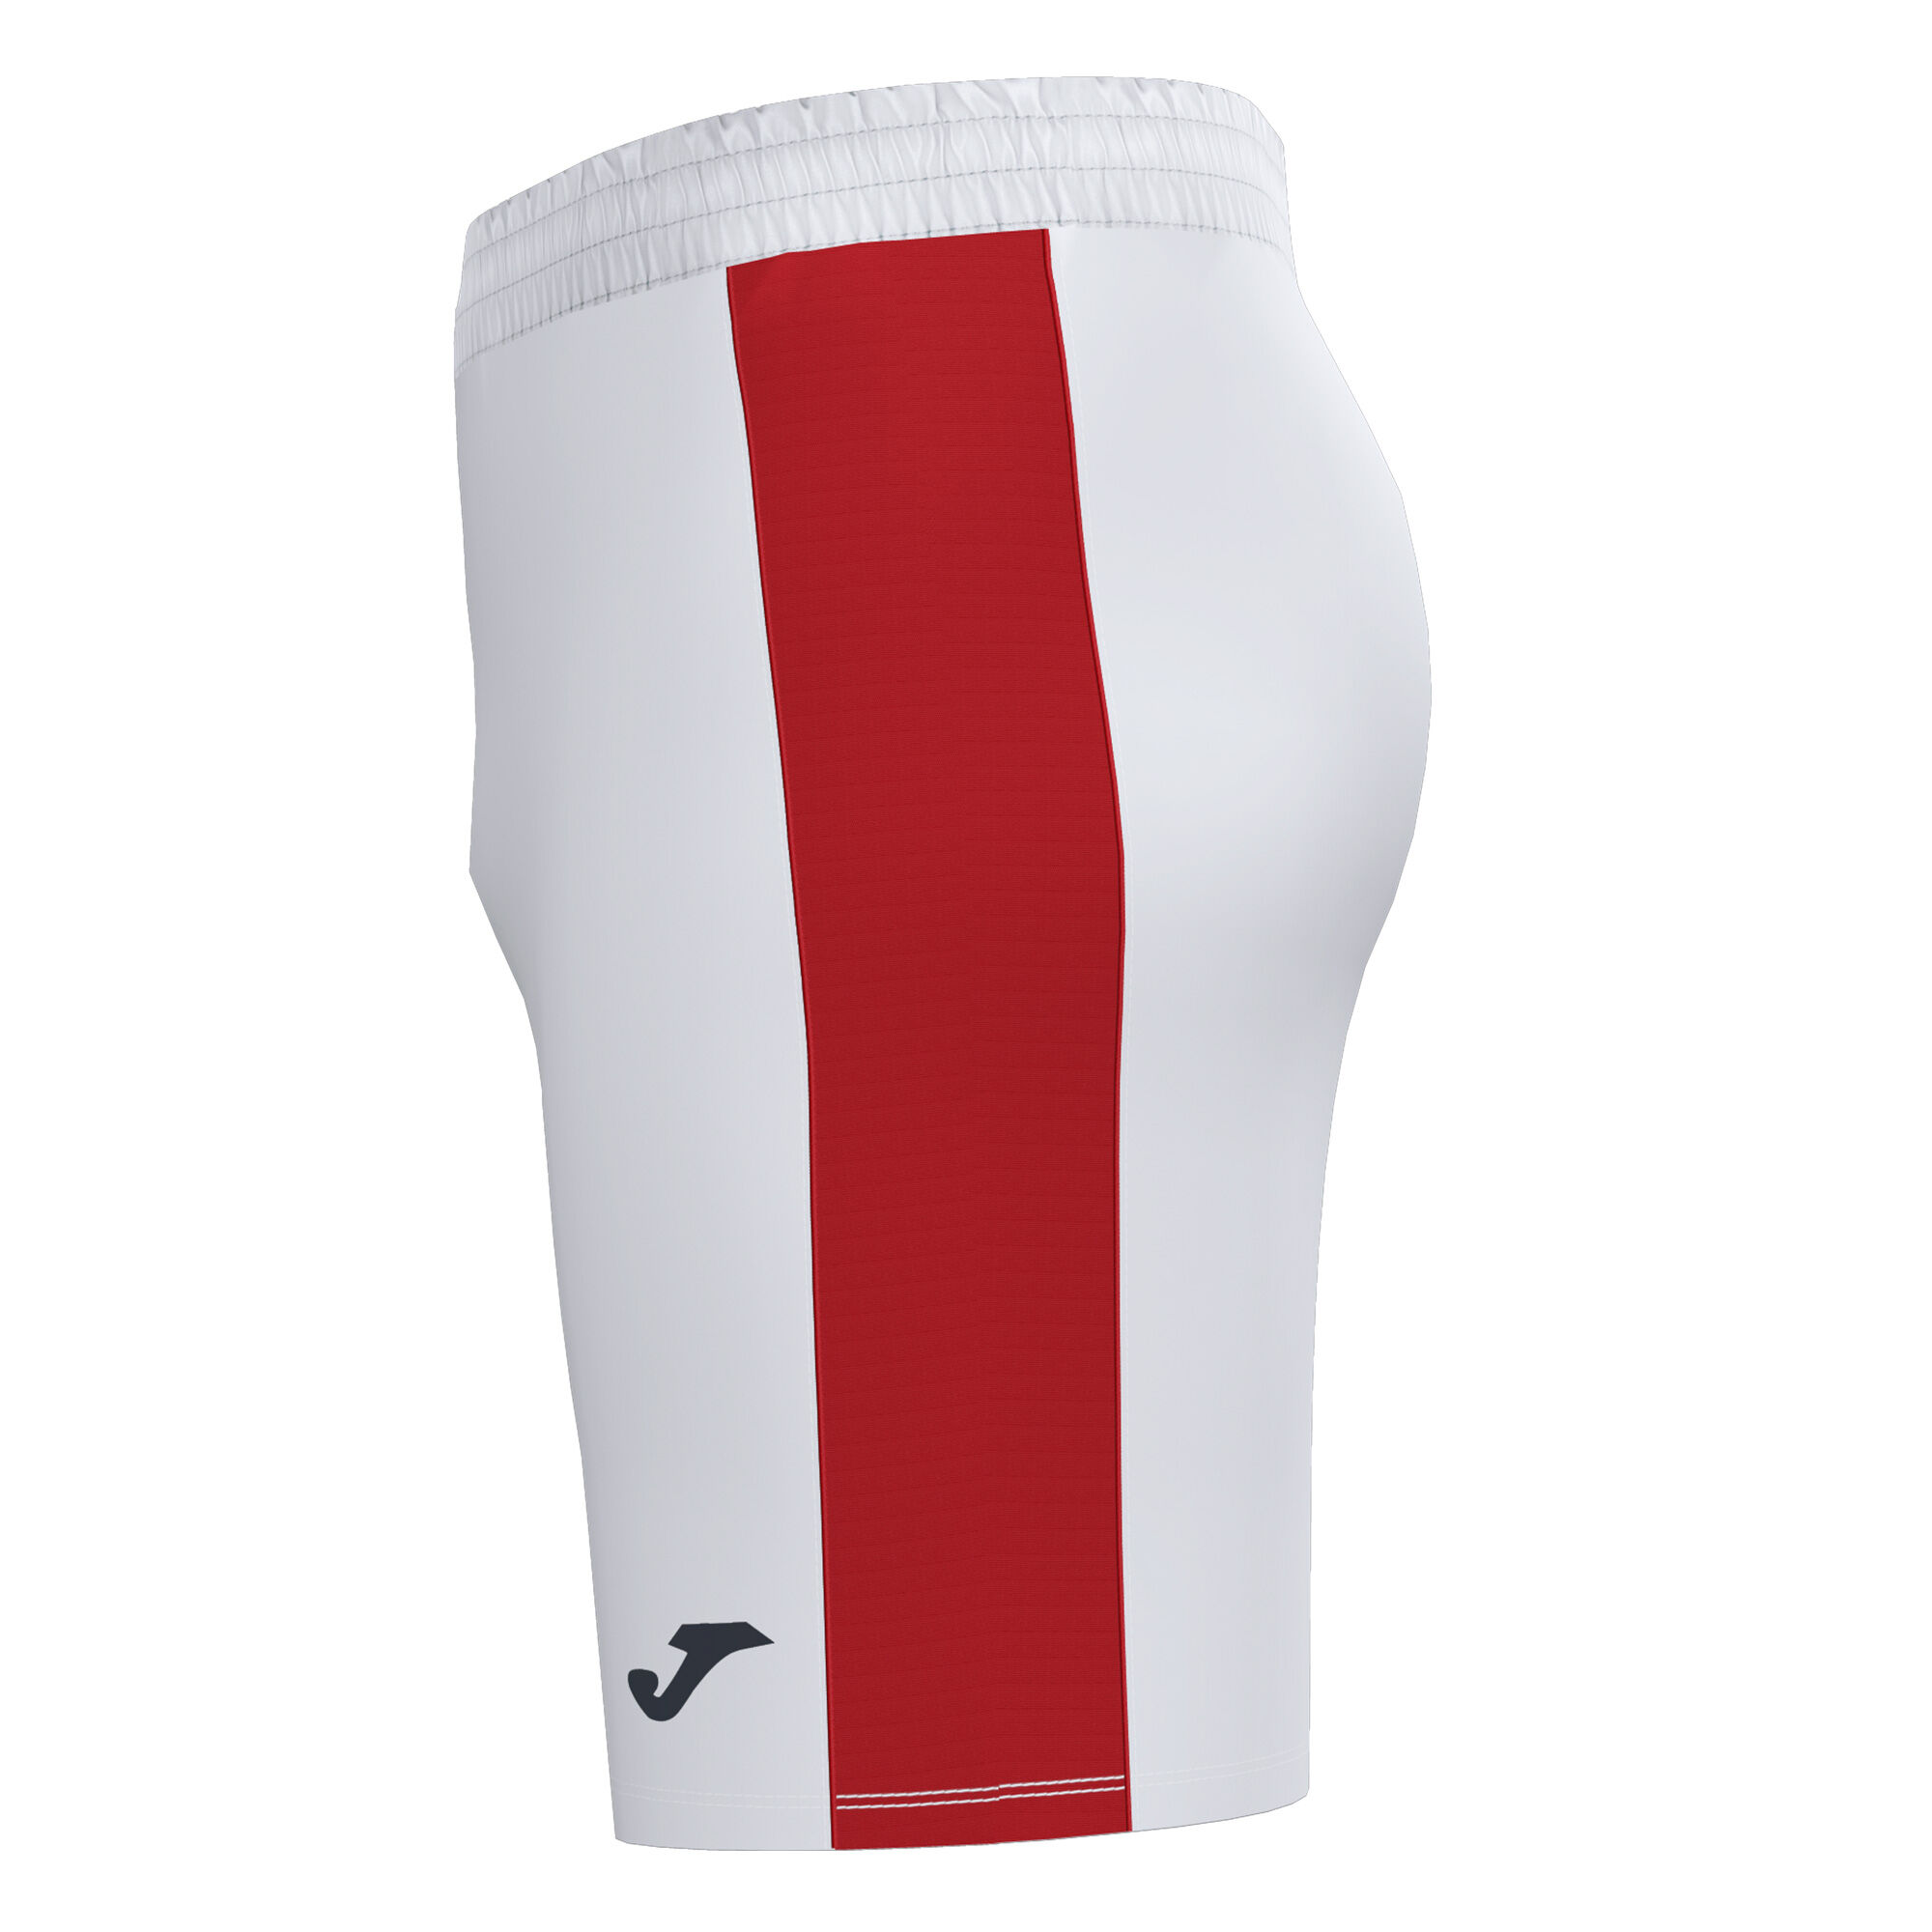 Pantaloni lungi pană bărbaȚi Maxi alb roșu